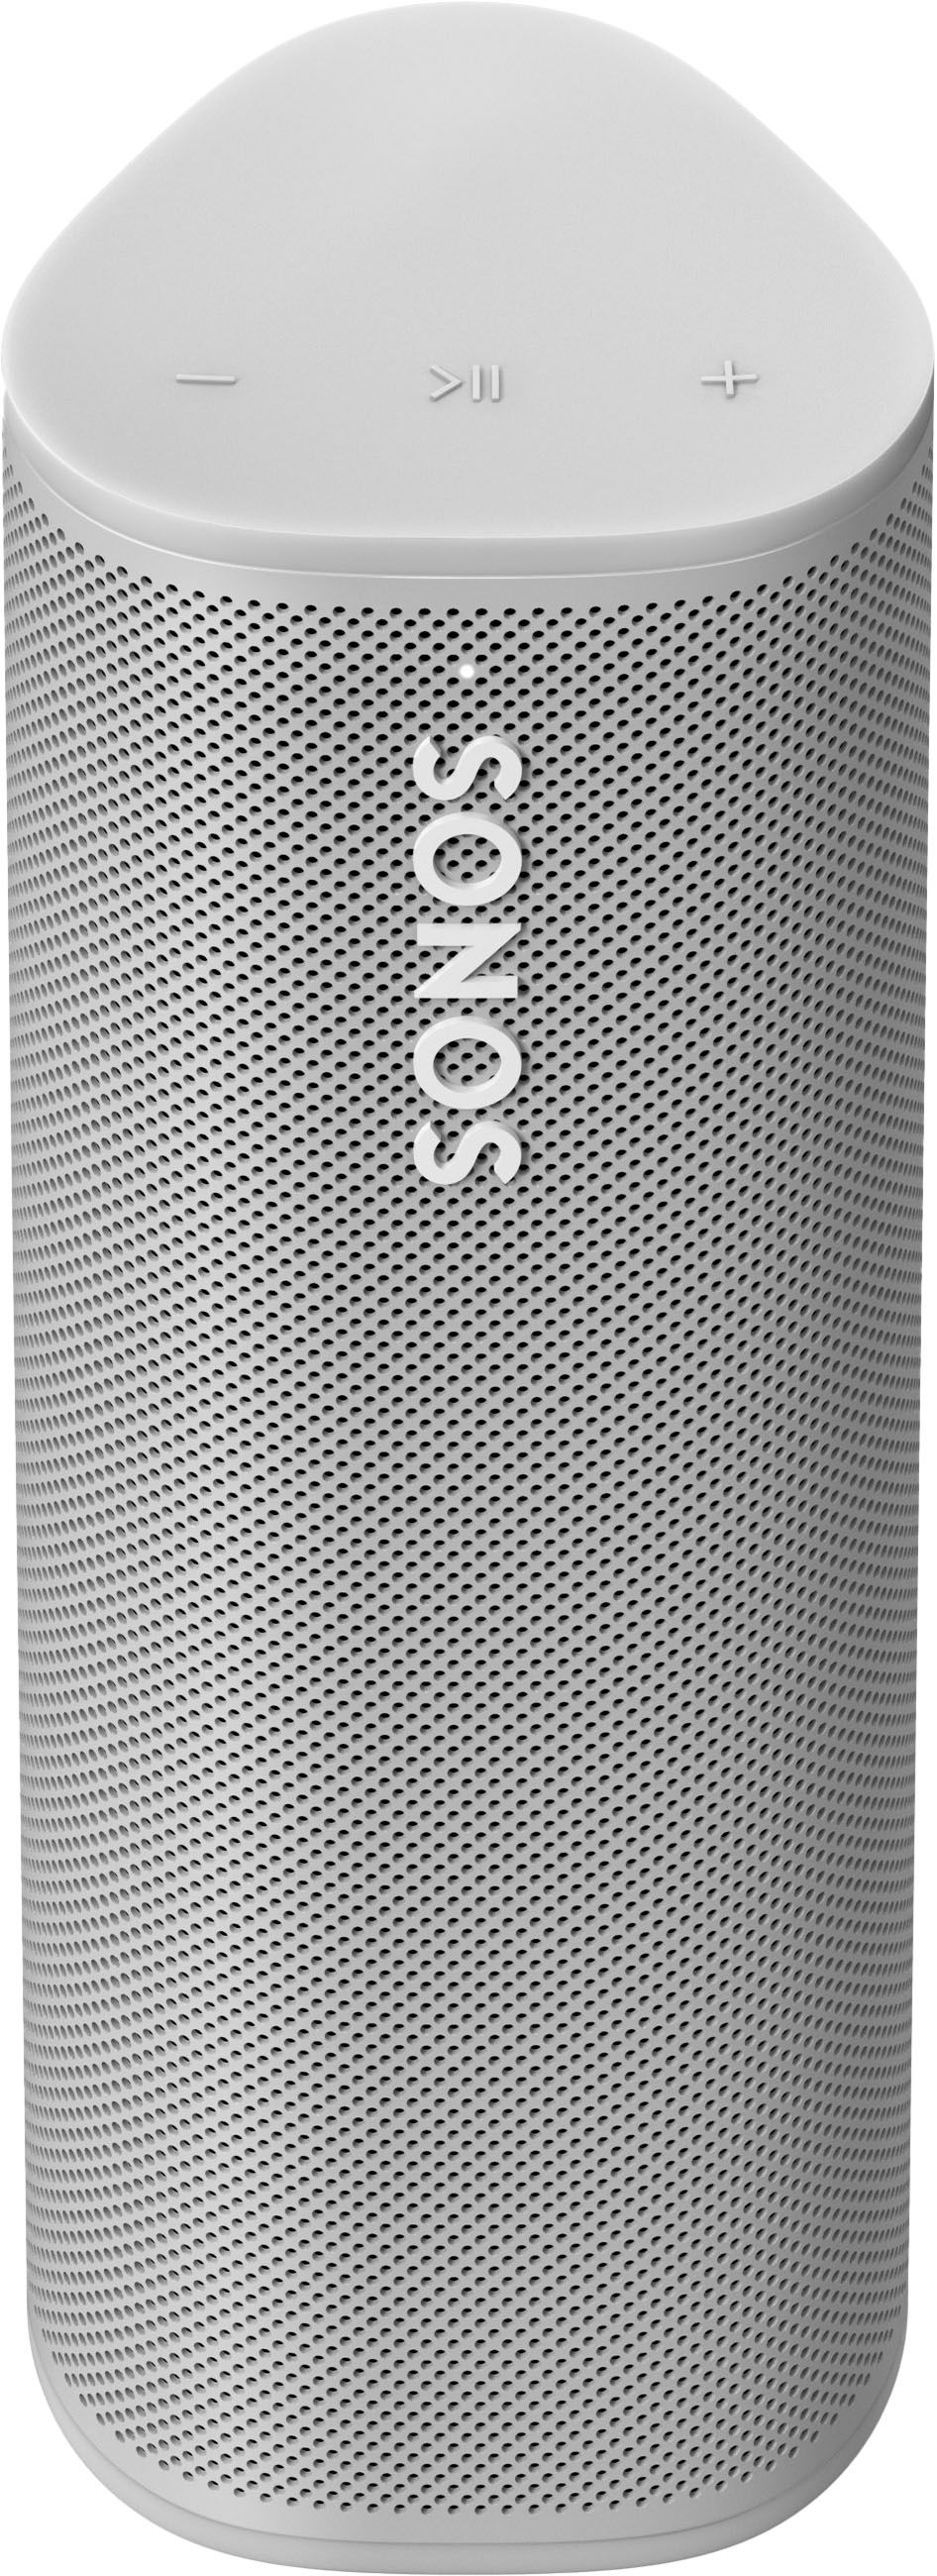 Sonos Roam SL Portable Bluetooth Wireless Speaker Lunar White RMSL1US1 - Best Buy | Best Buy U.S.